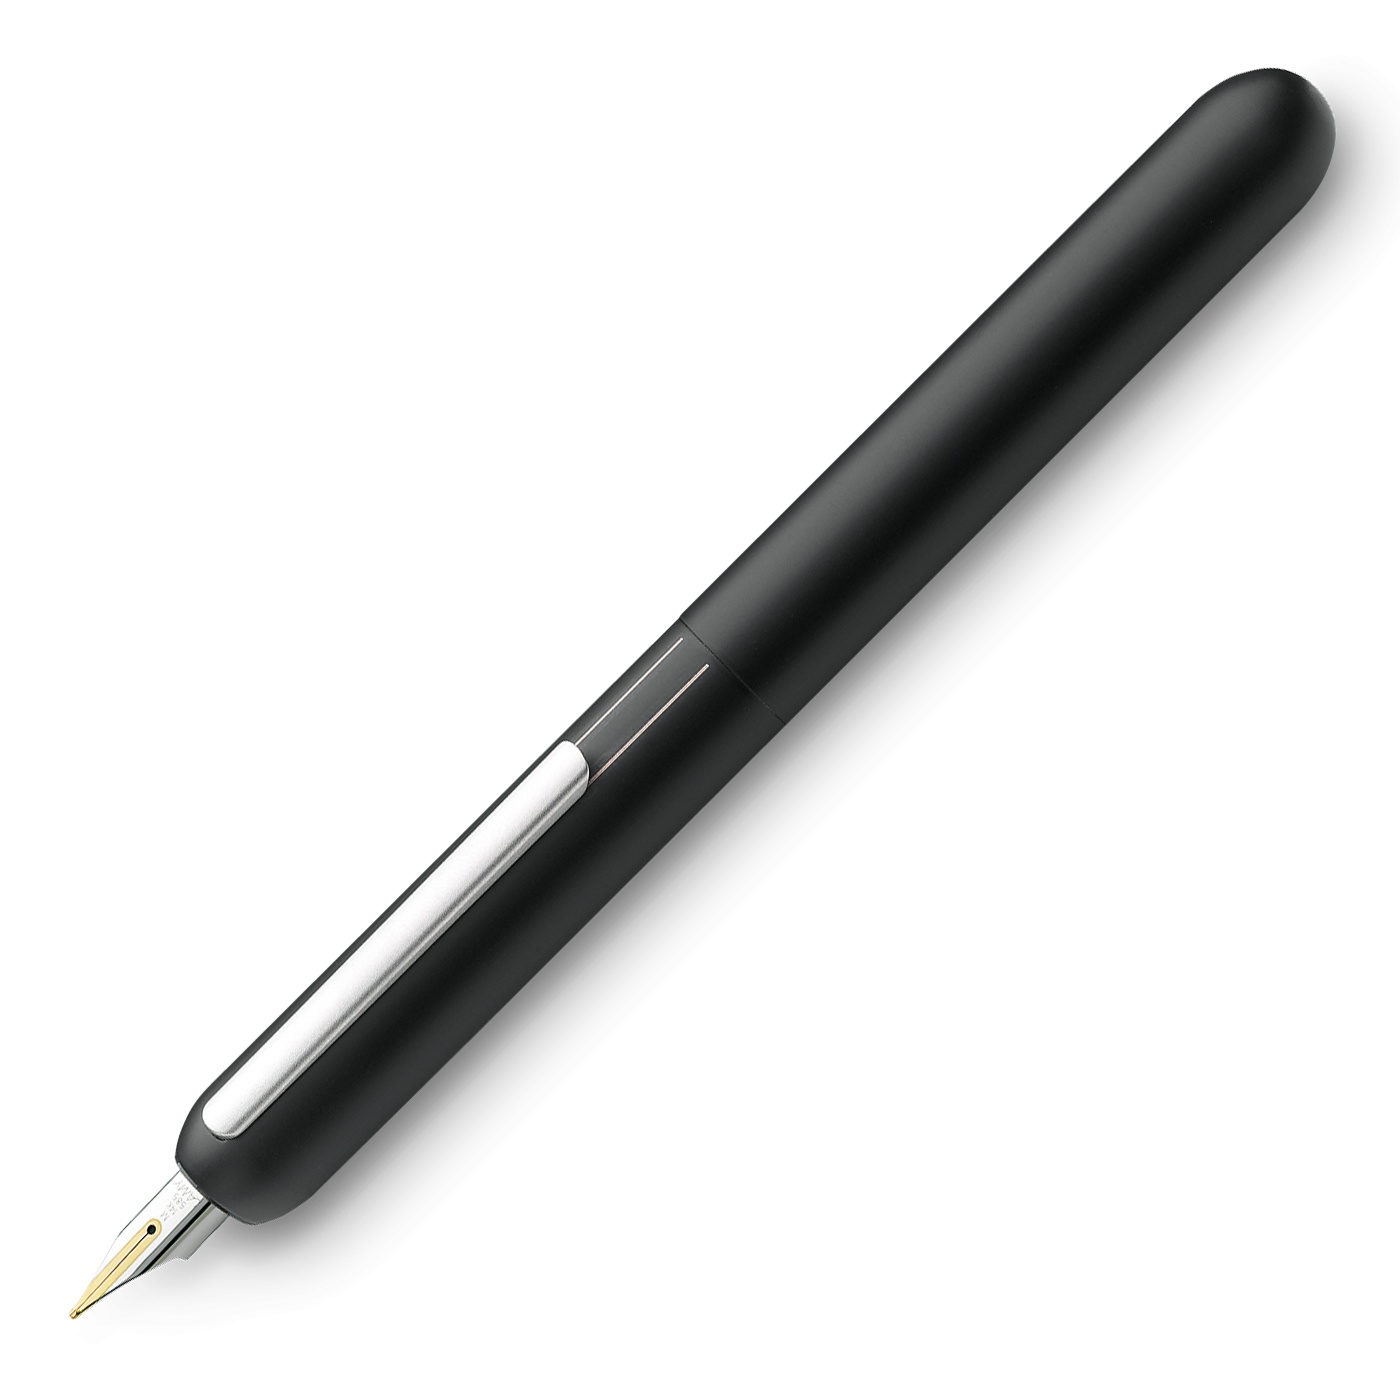 Dialog 3 Matt black Fountain pen in the group Pens / Fine Writing / Gift Pens at Pen Store (101811_r)